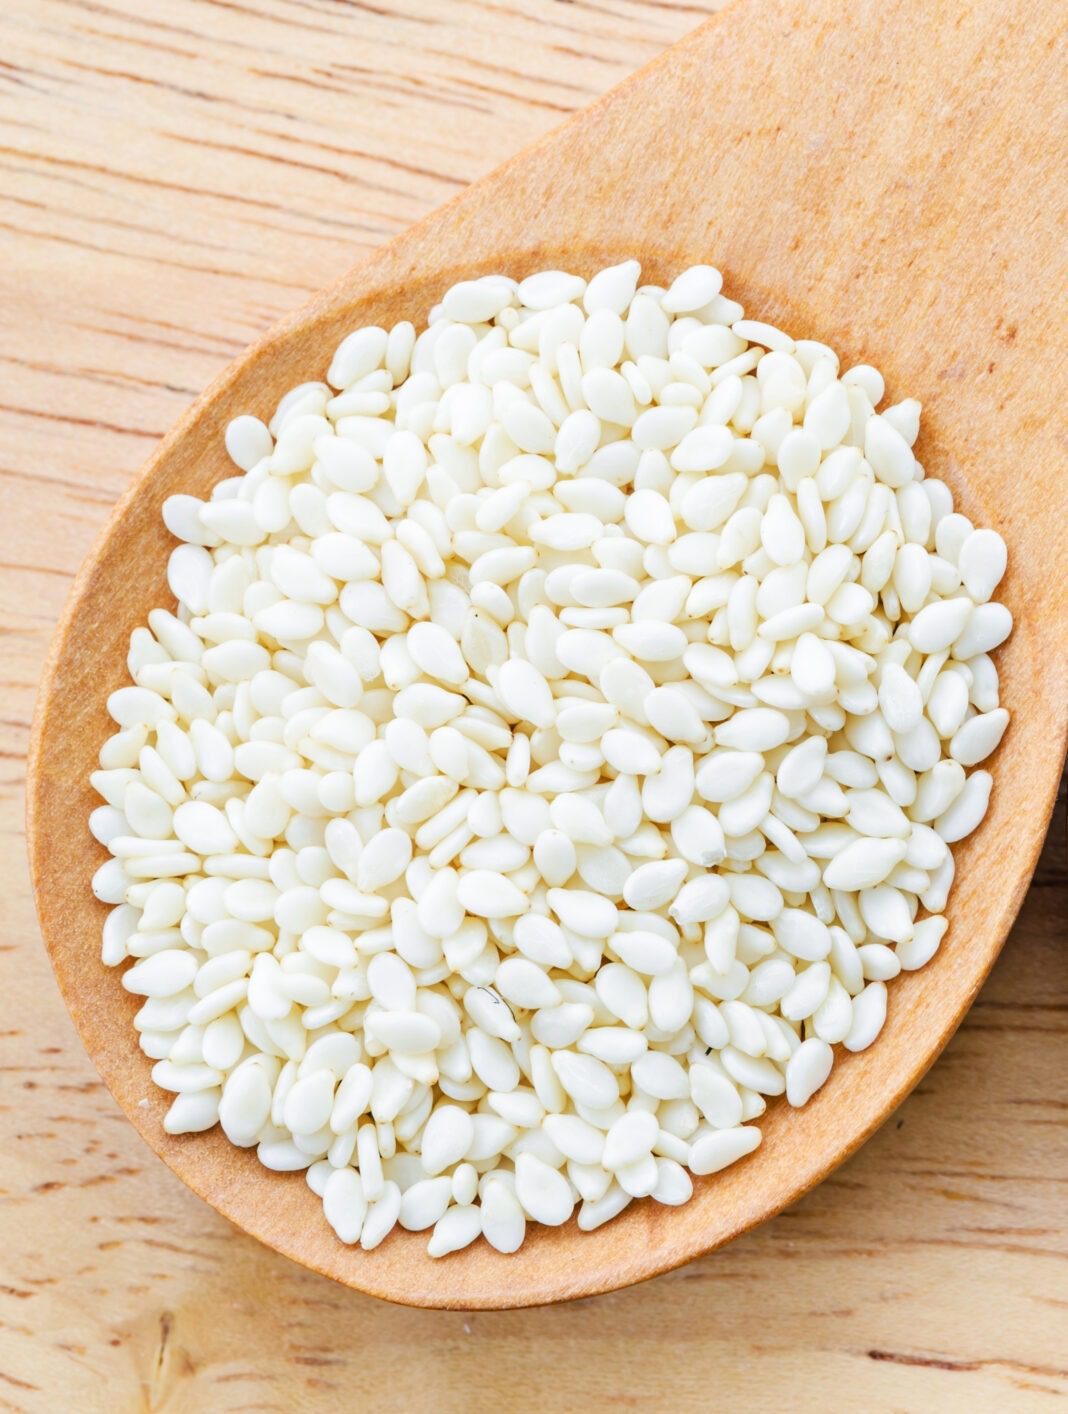 White sesame seed benefits